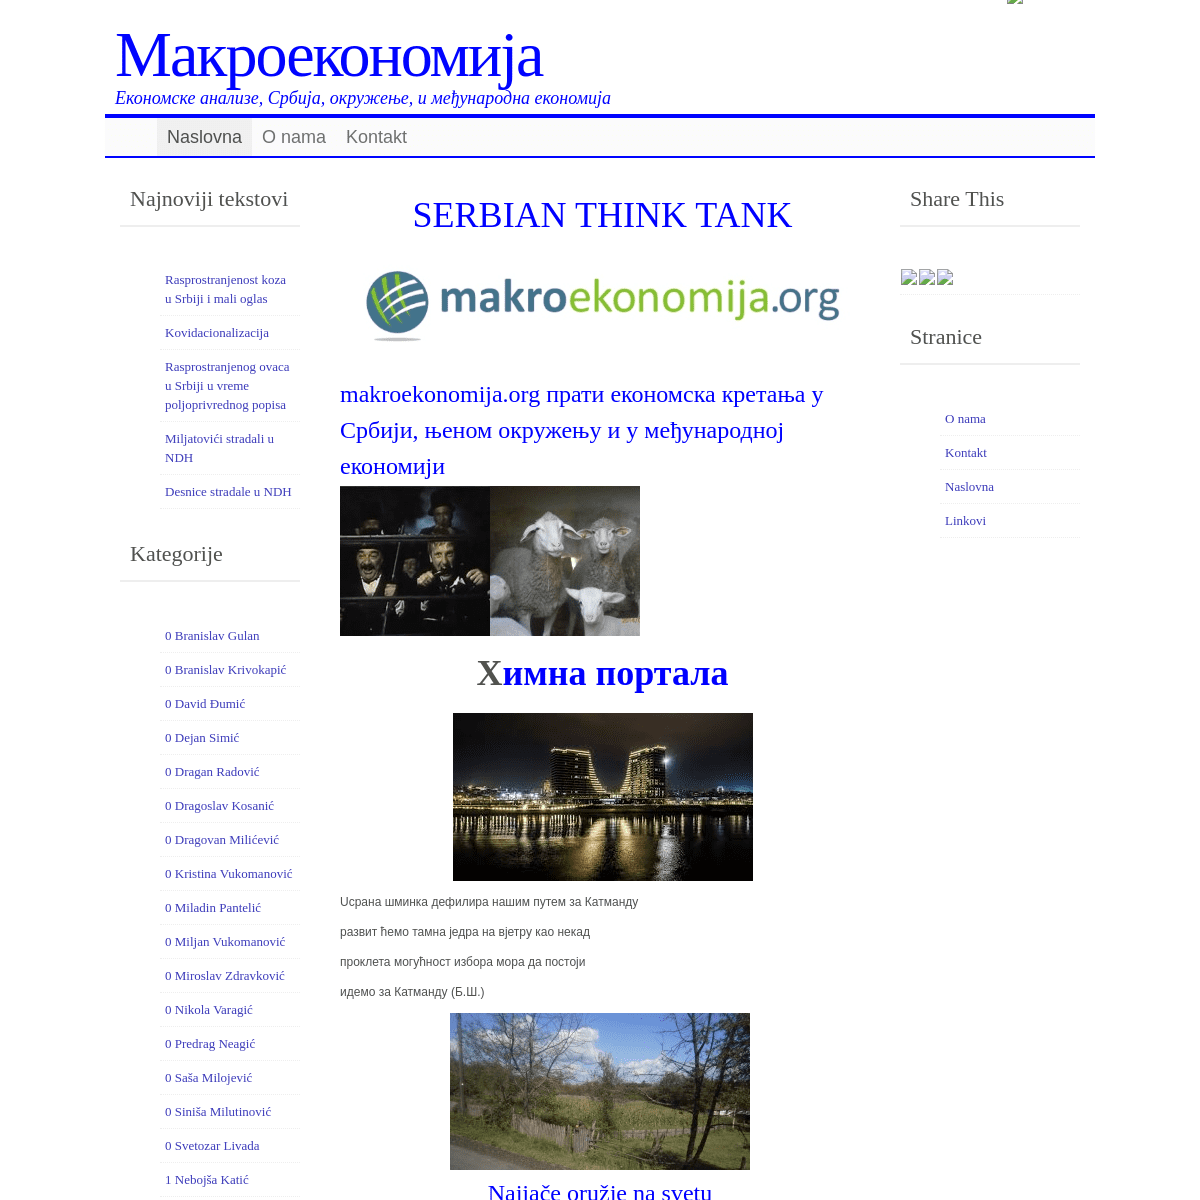 A complete backup of makroekonomija.org